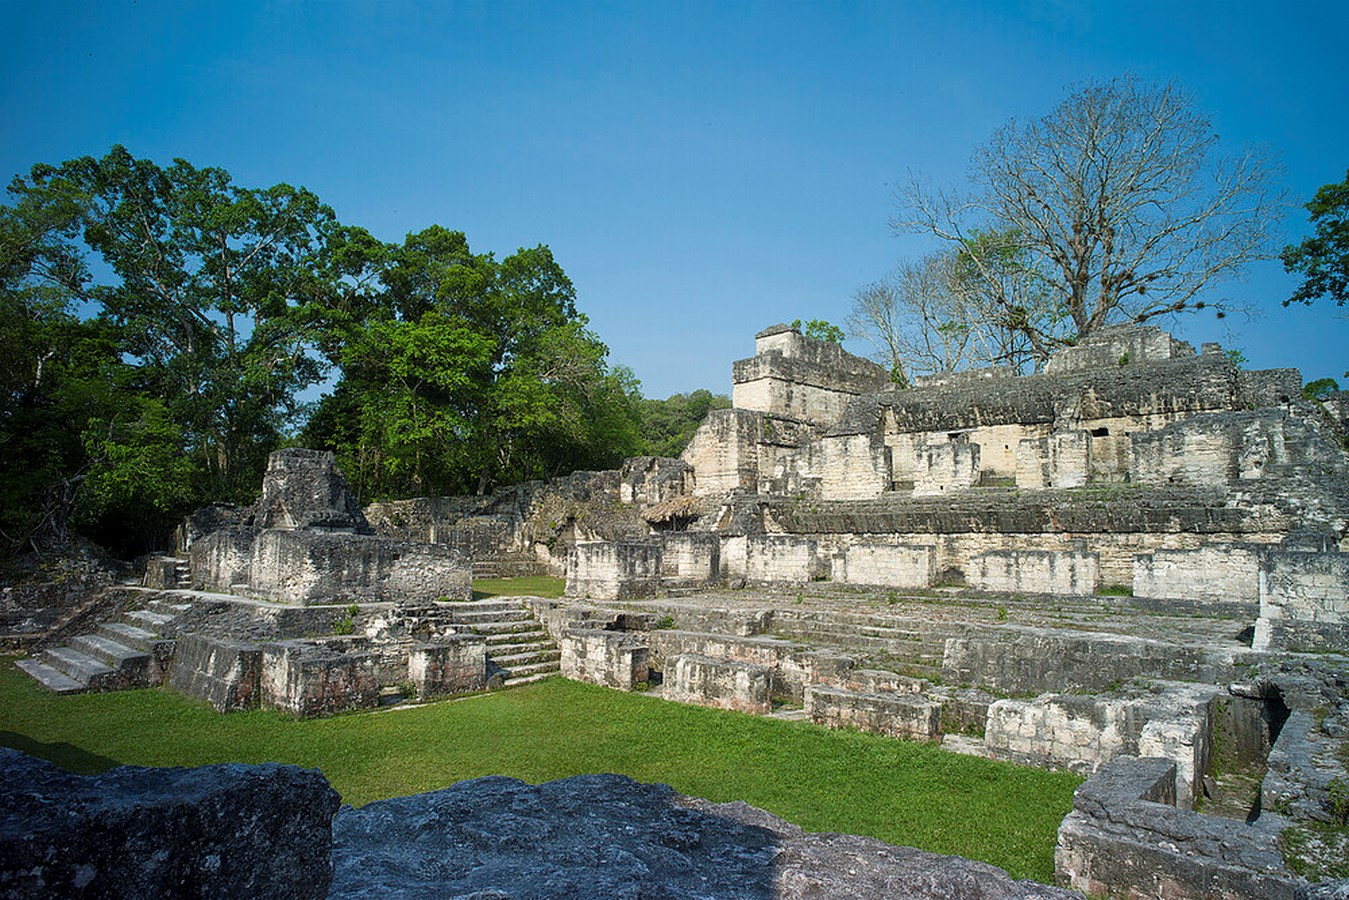 Lost in Time Tikal, Guatemala - Sheet3